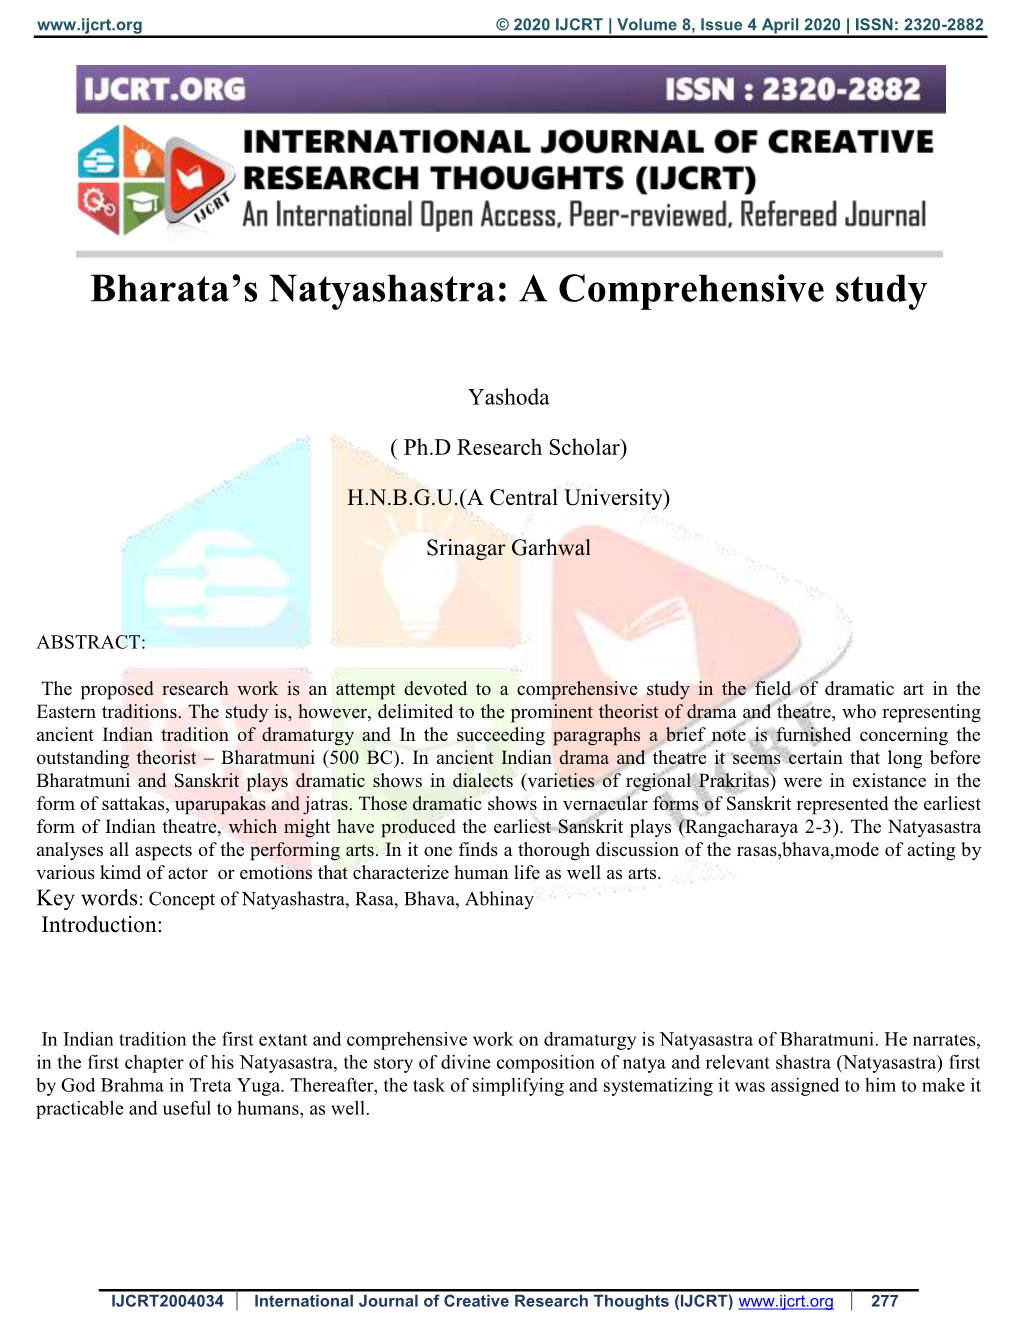 Bharata's Natyashastra: a Comprehensive Study